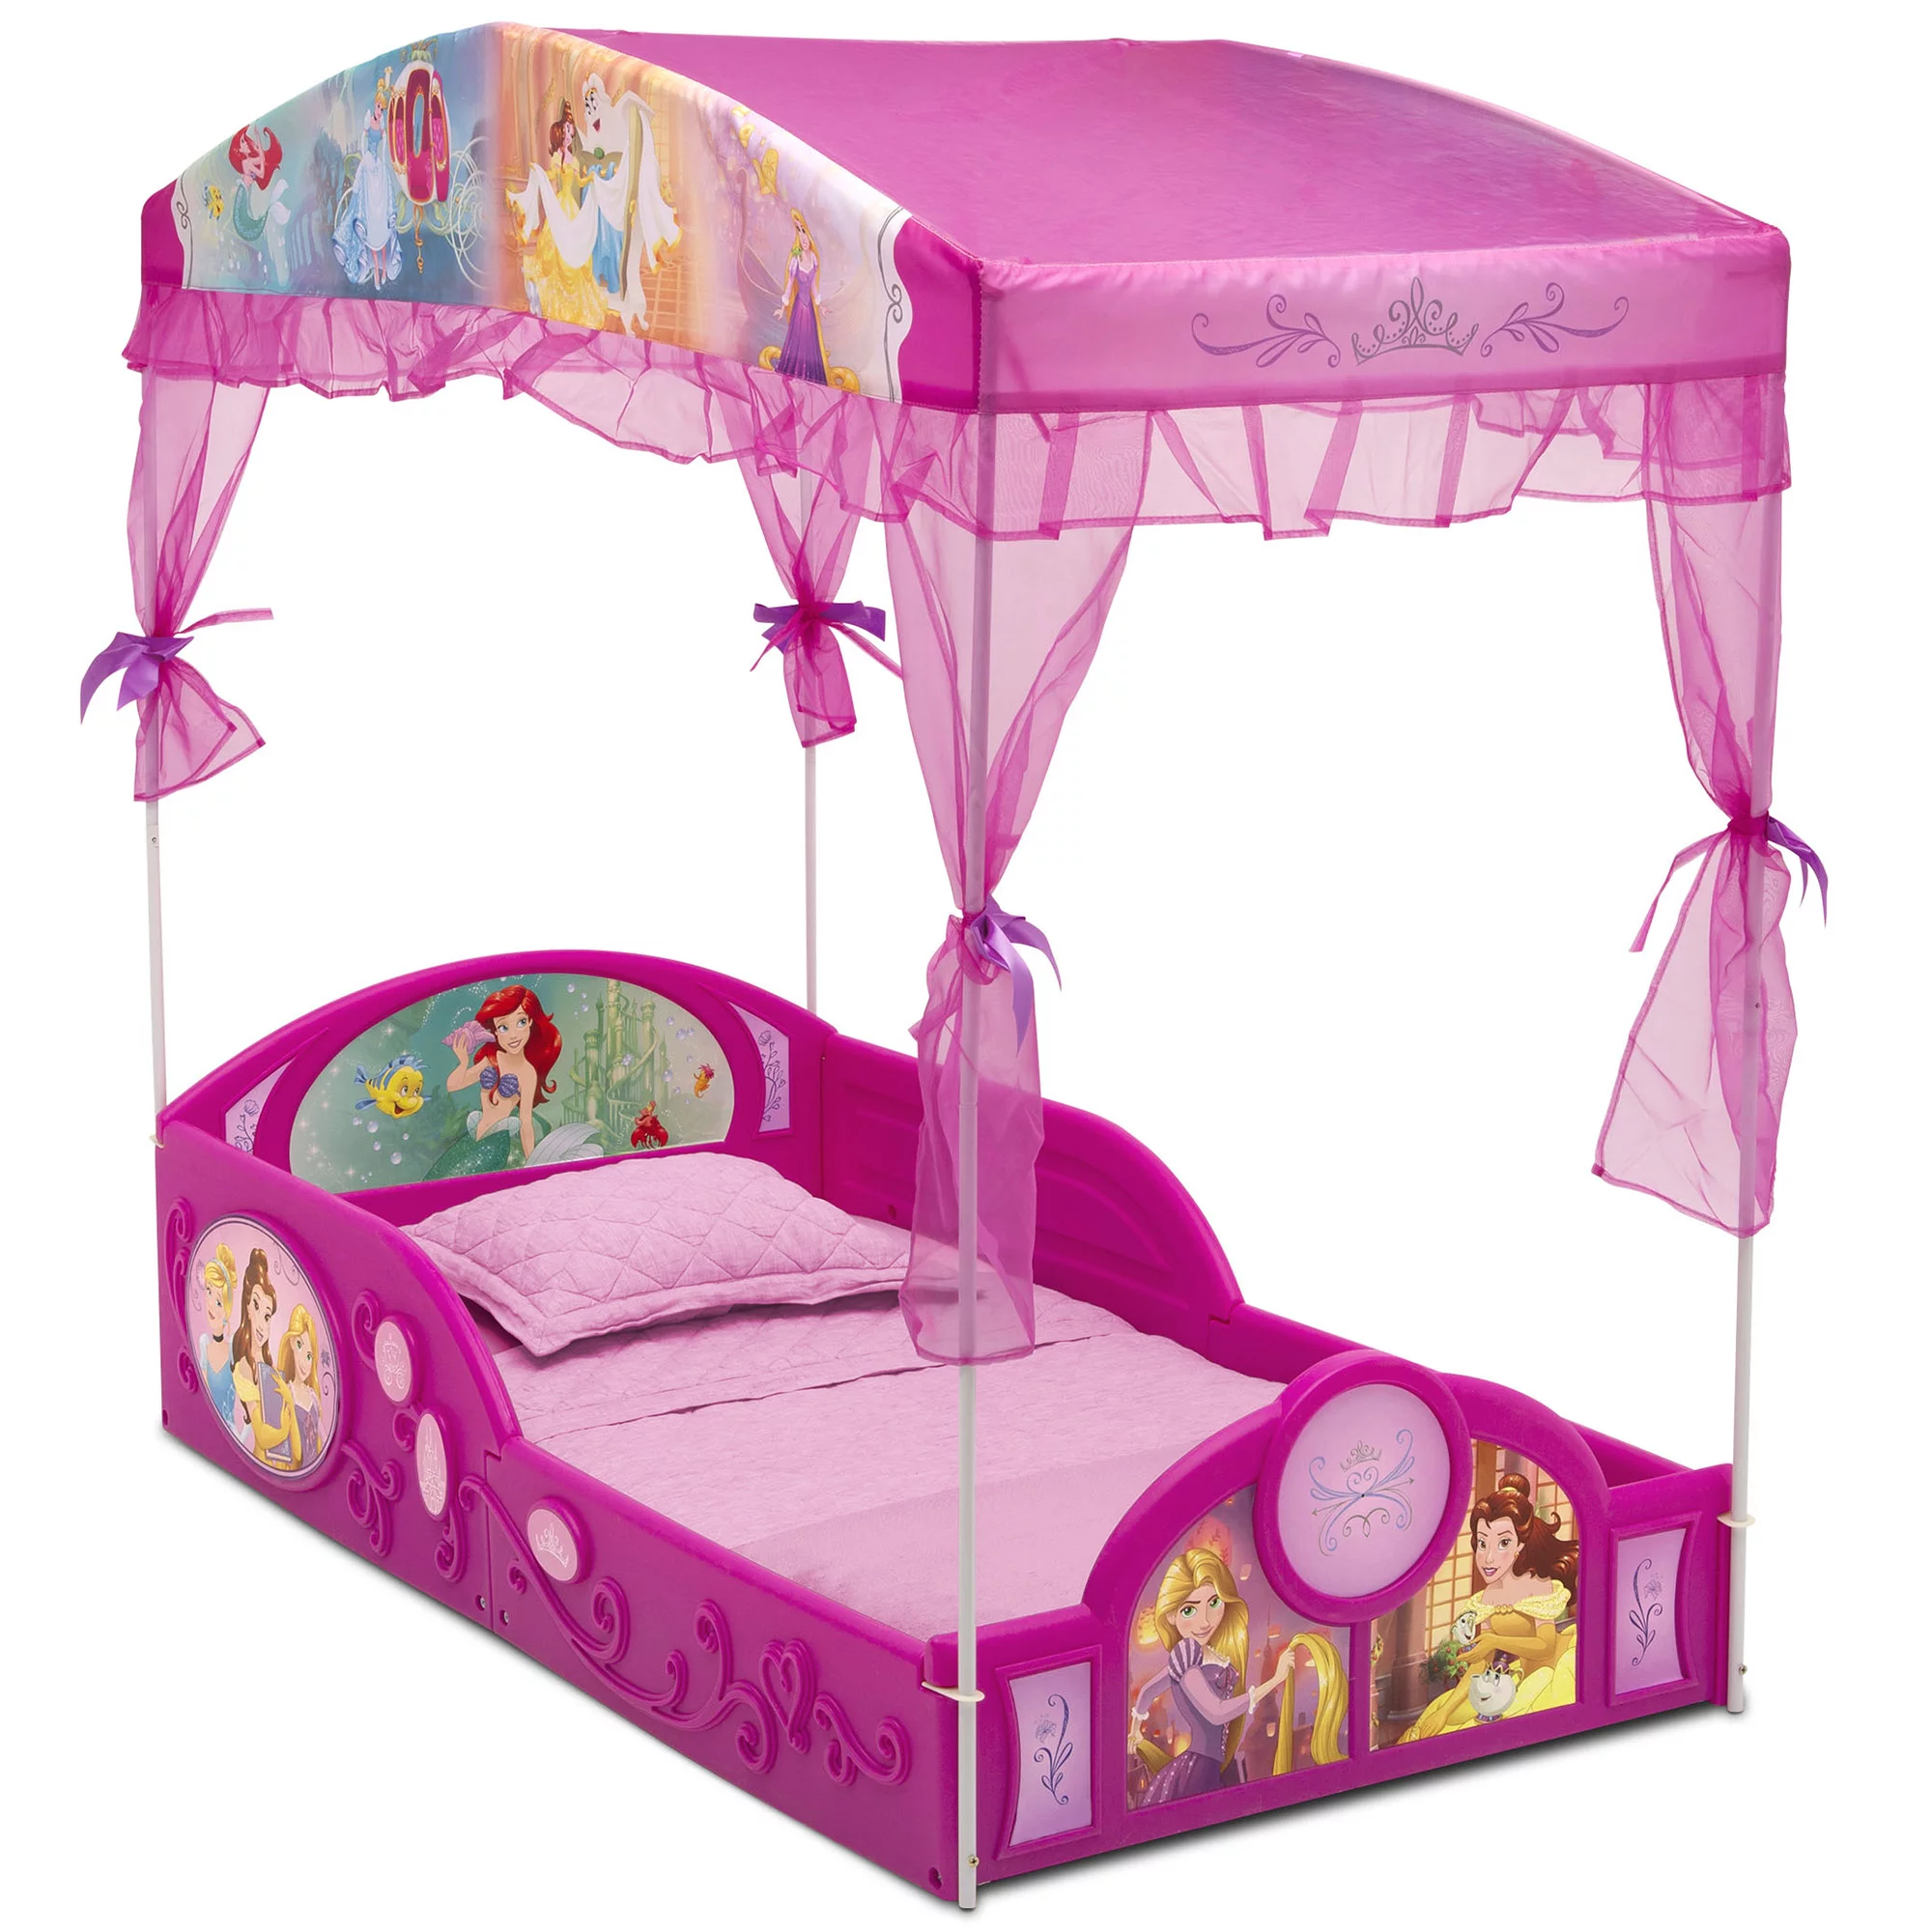 Disney Princess Kids Plastic Storage Toddler Bed, Pink